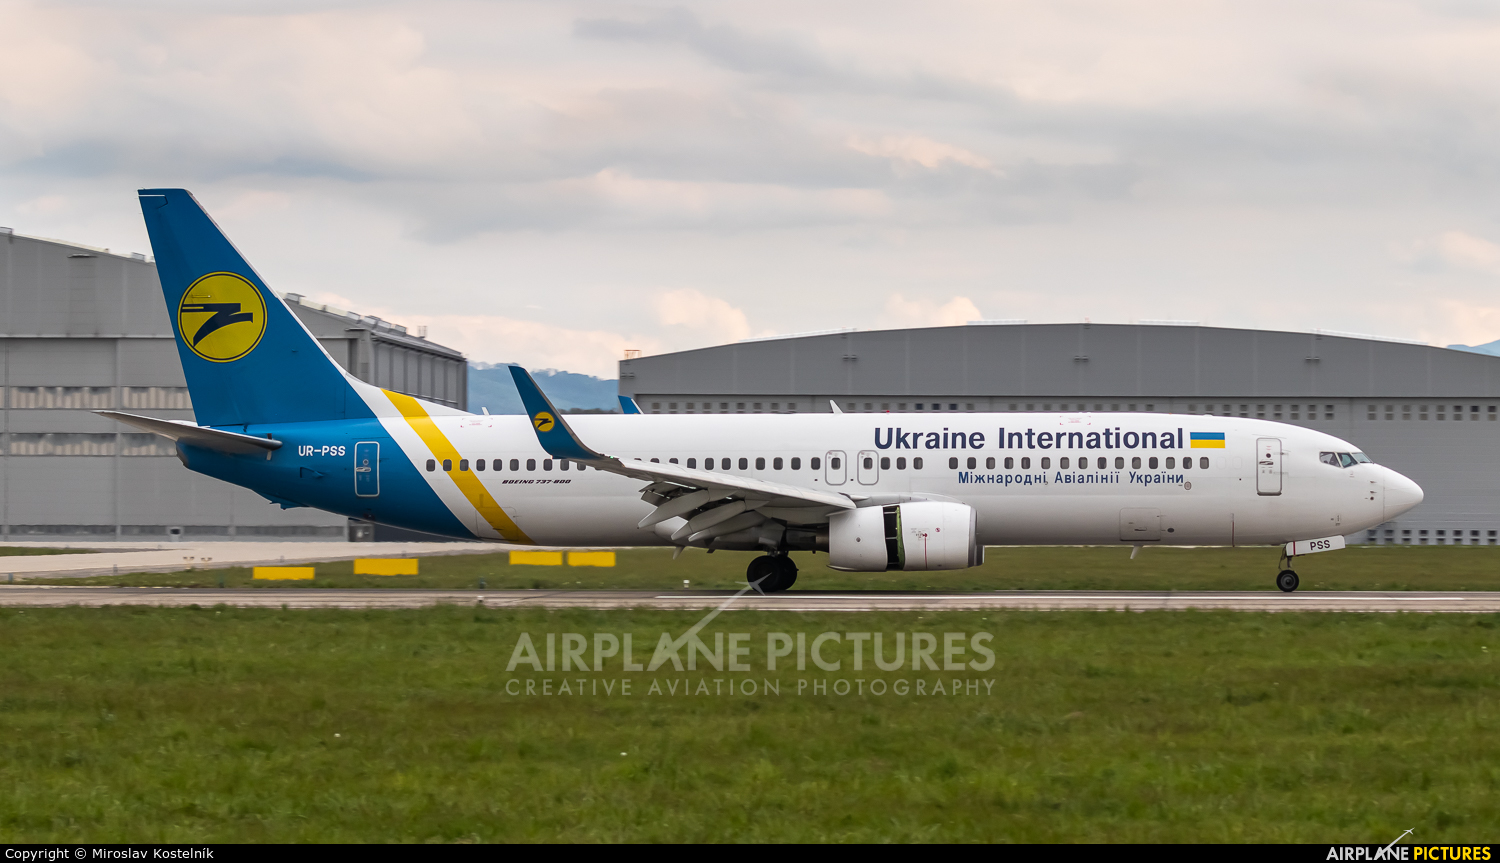 Ukraine International Airlines UR-PSS aircraft at Ostrava Mošnov